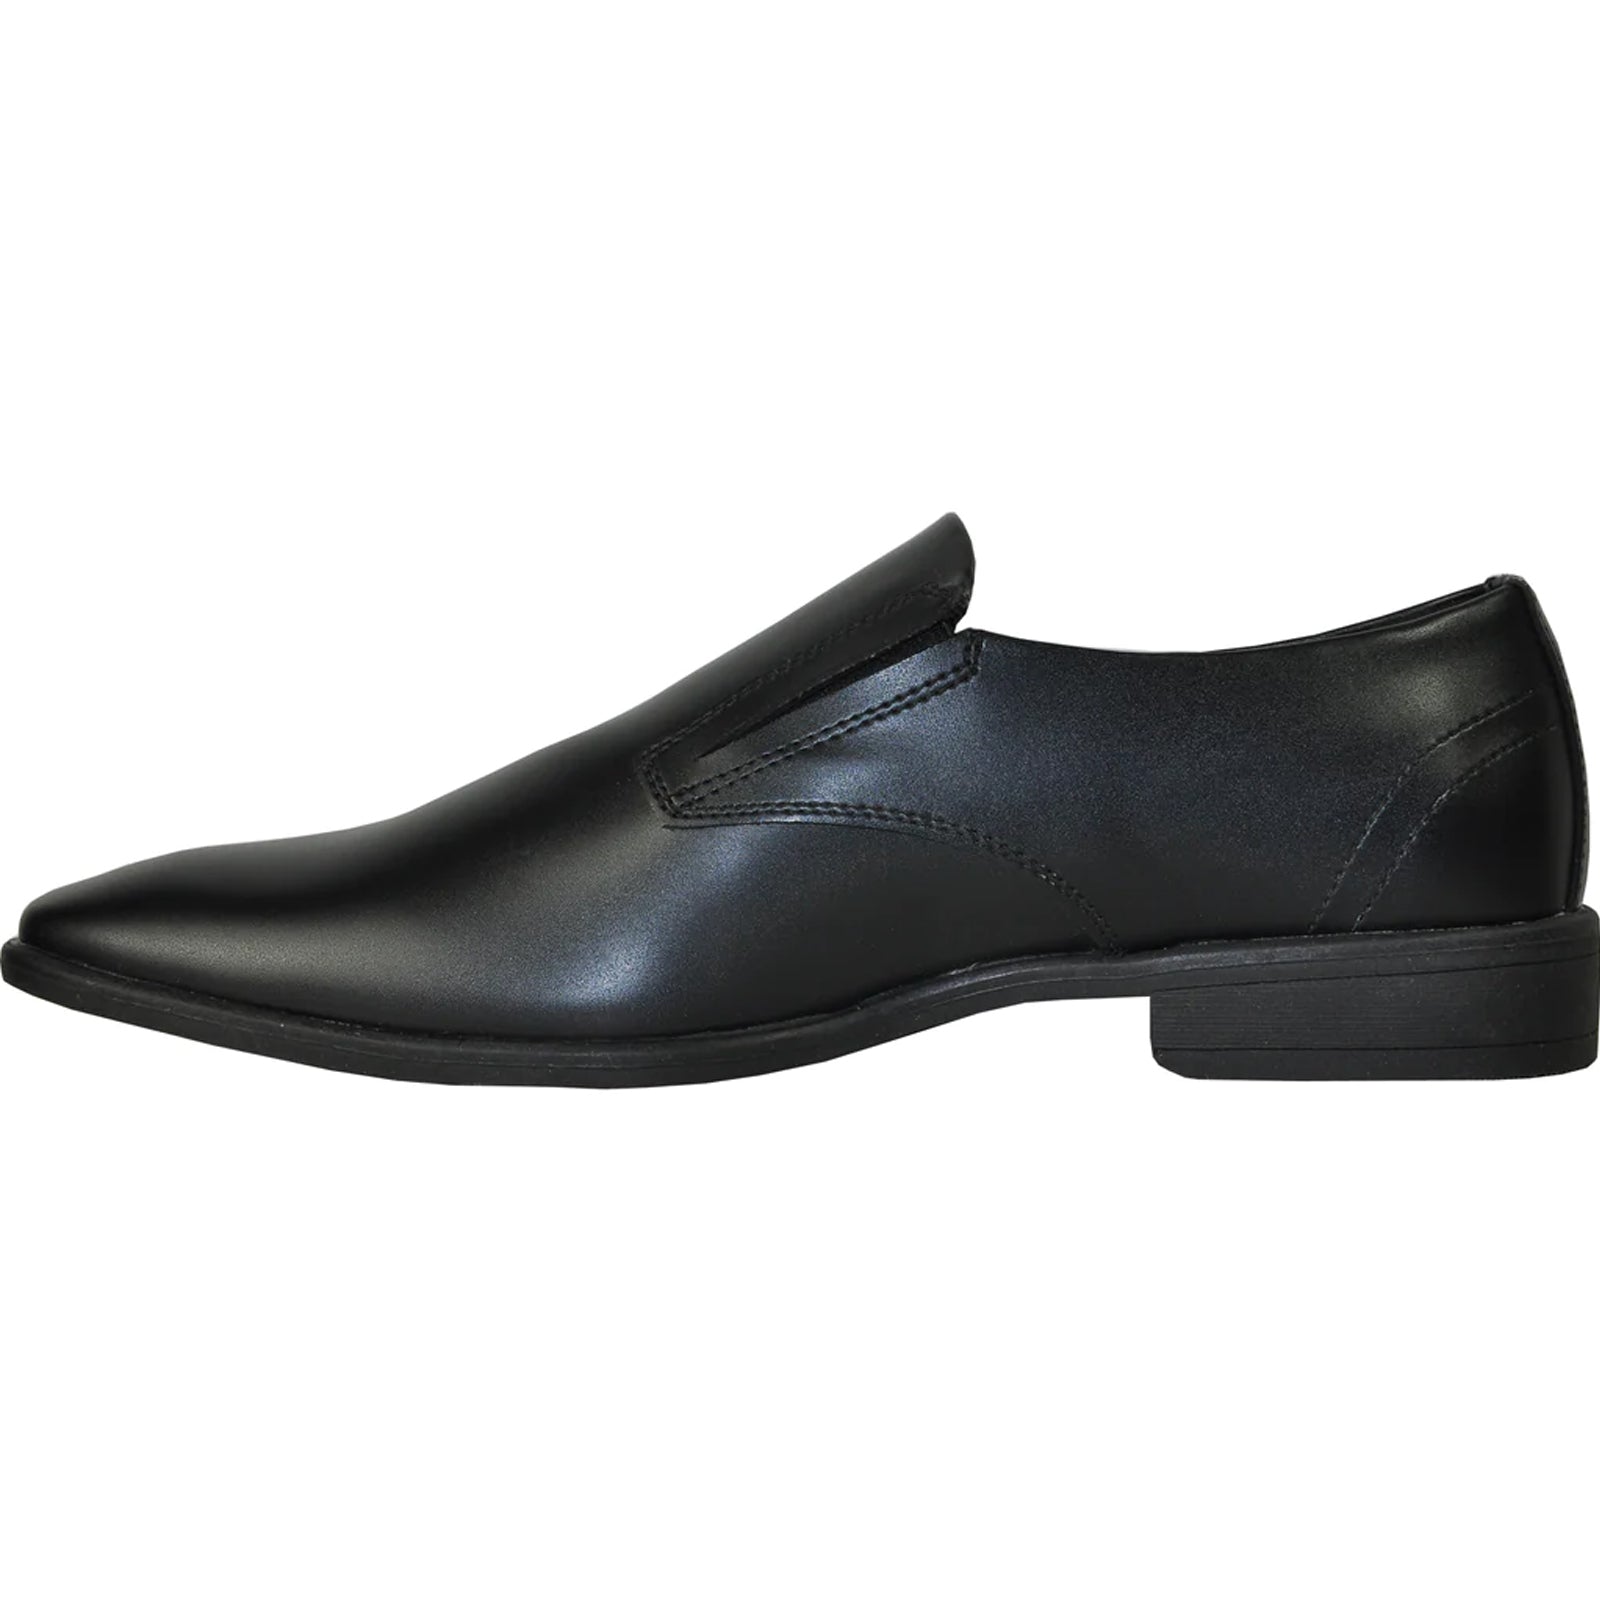 "Black Square Toe Dress Loafer - Men's Plain Pointy Style"